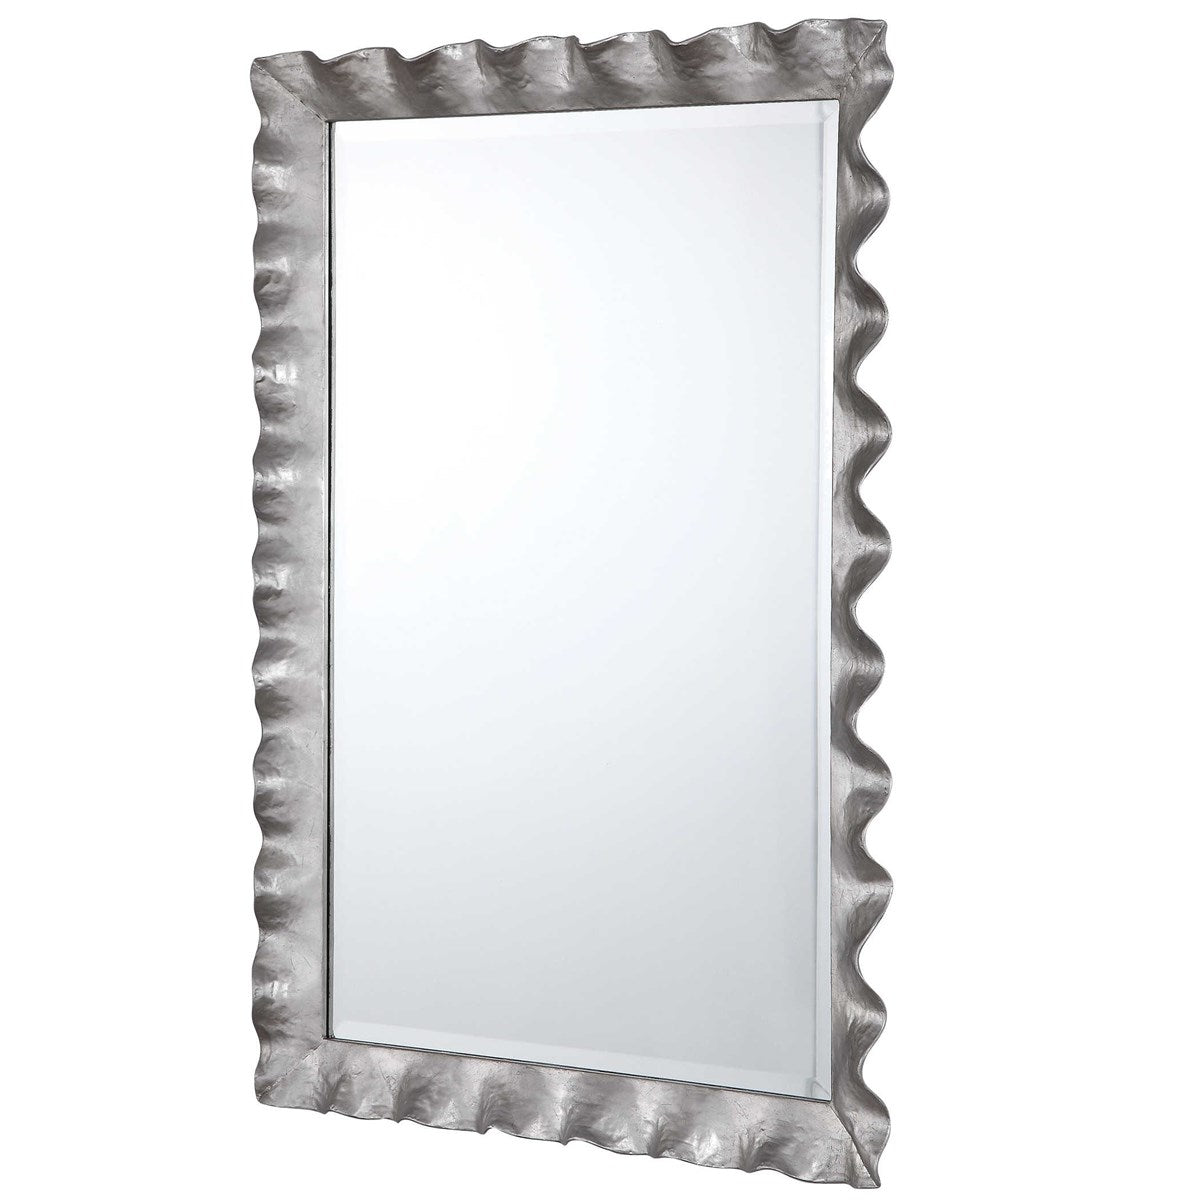 Scalloped SL rectangle mirror